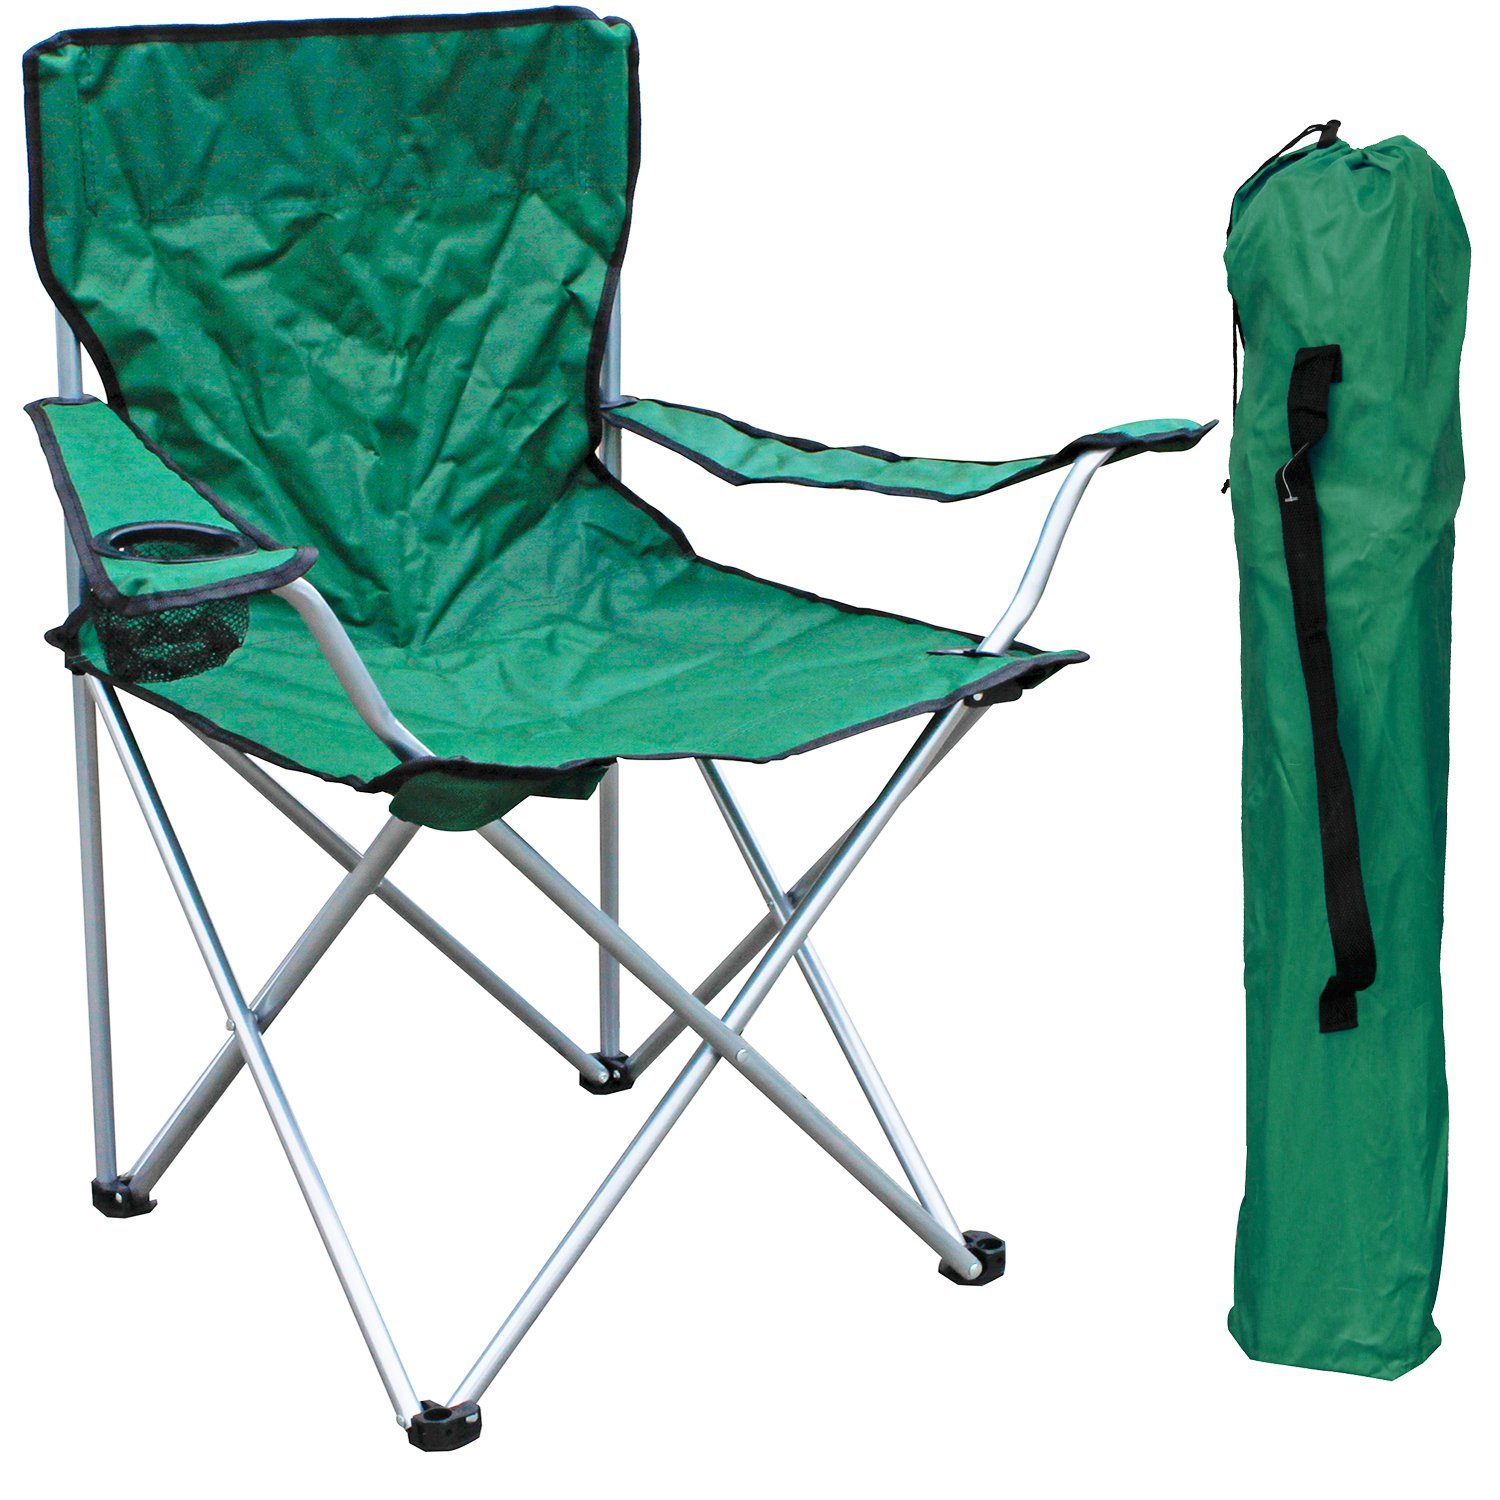 Tasche inkl. Campingmöbel Essgruppe Mojawo 3-teiliges Stuhl 1x + 2x Grün Tisch Set